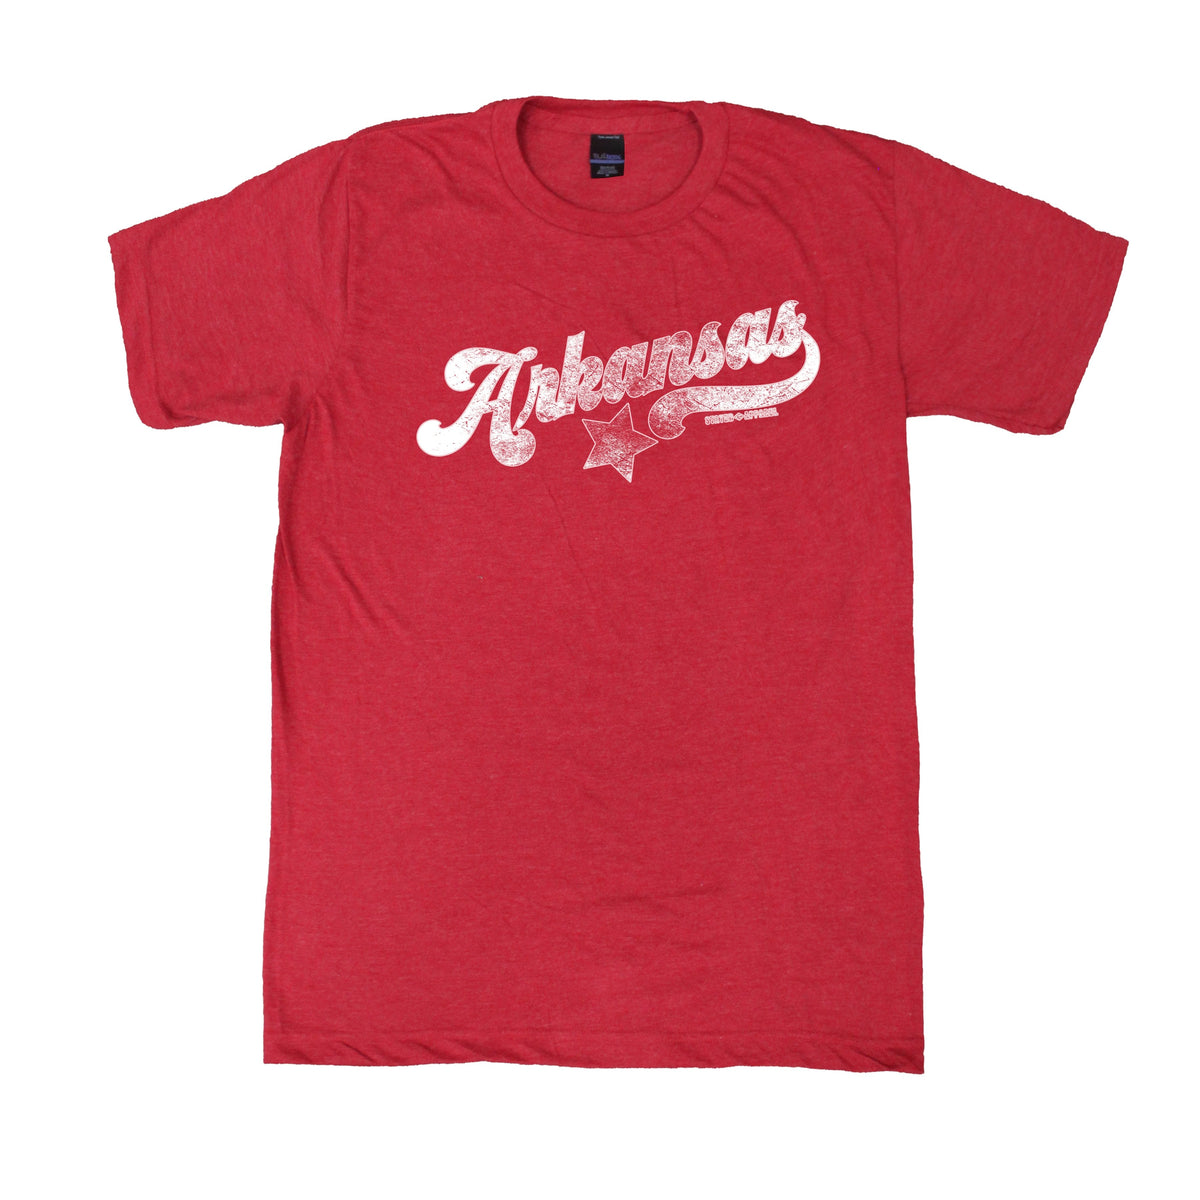 Arkansas 70's Youth T-shirt